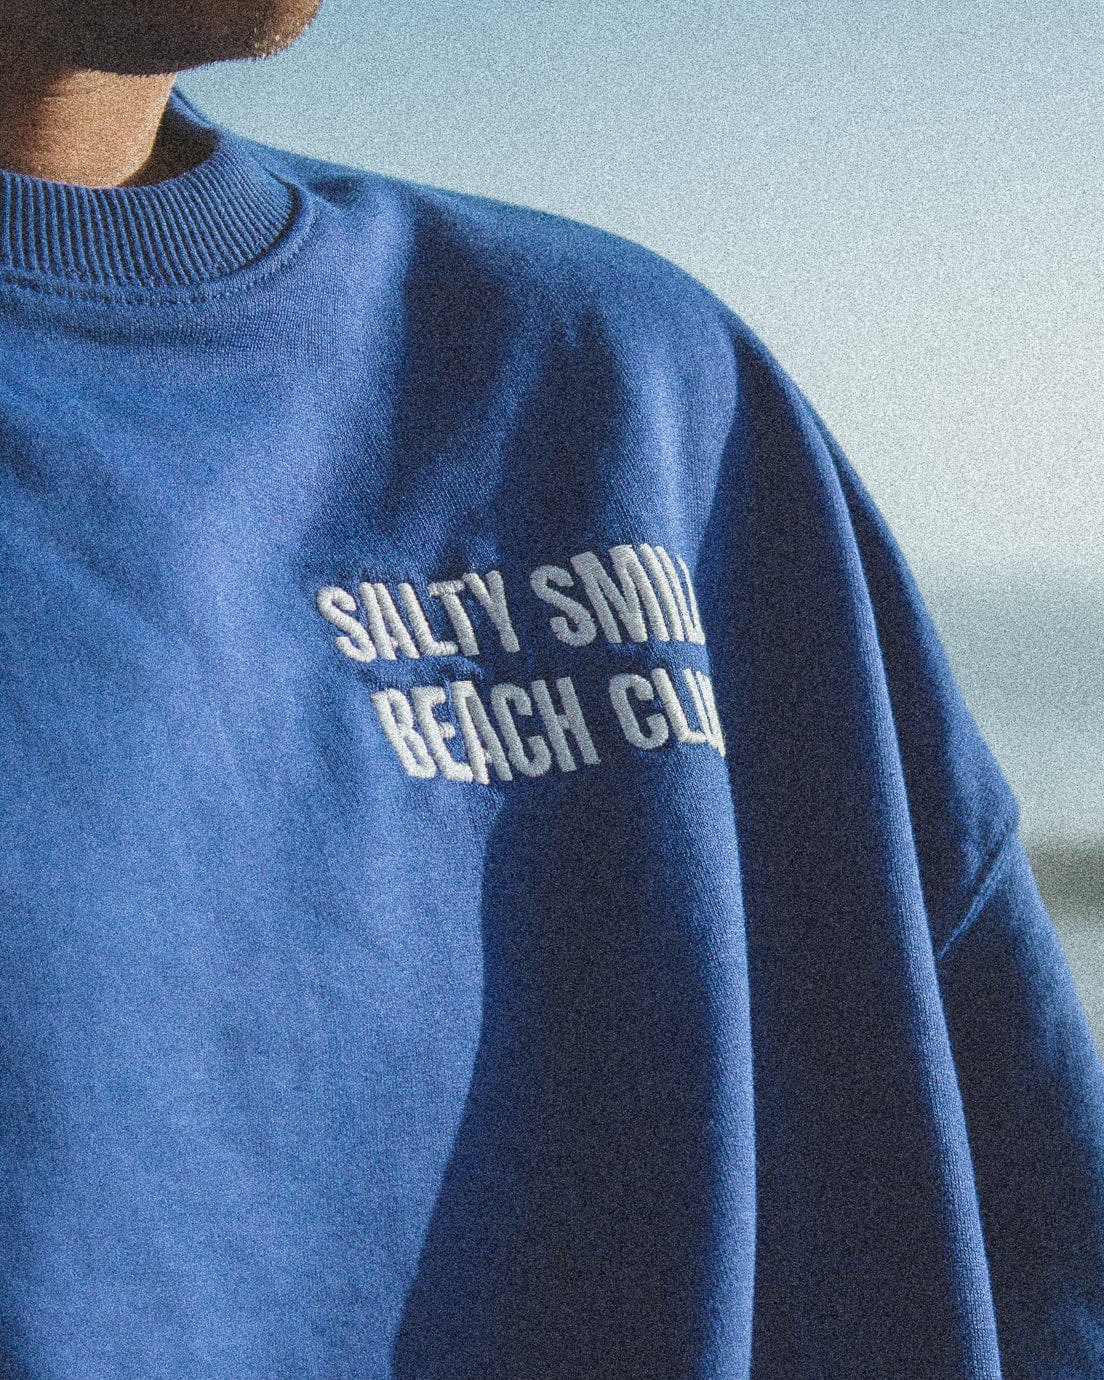 vetements surf salty smile BEACH CLUB BLEU SWEATSHIRT marque eco responsable coton bio